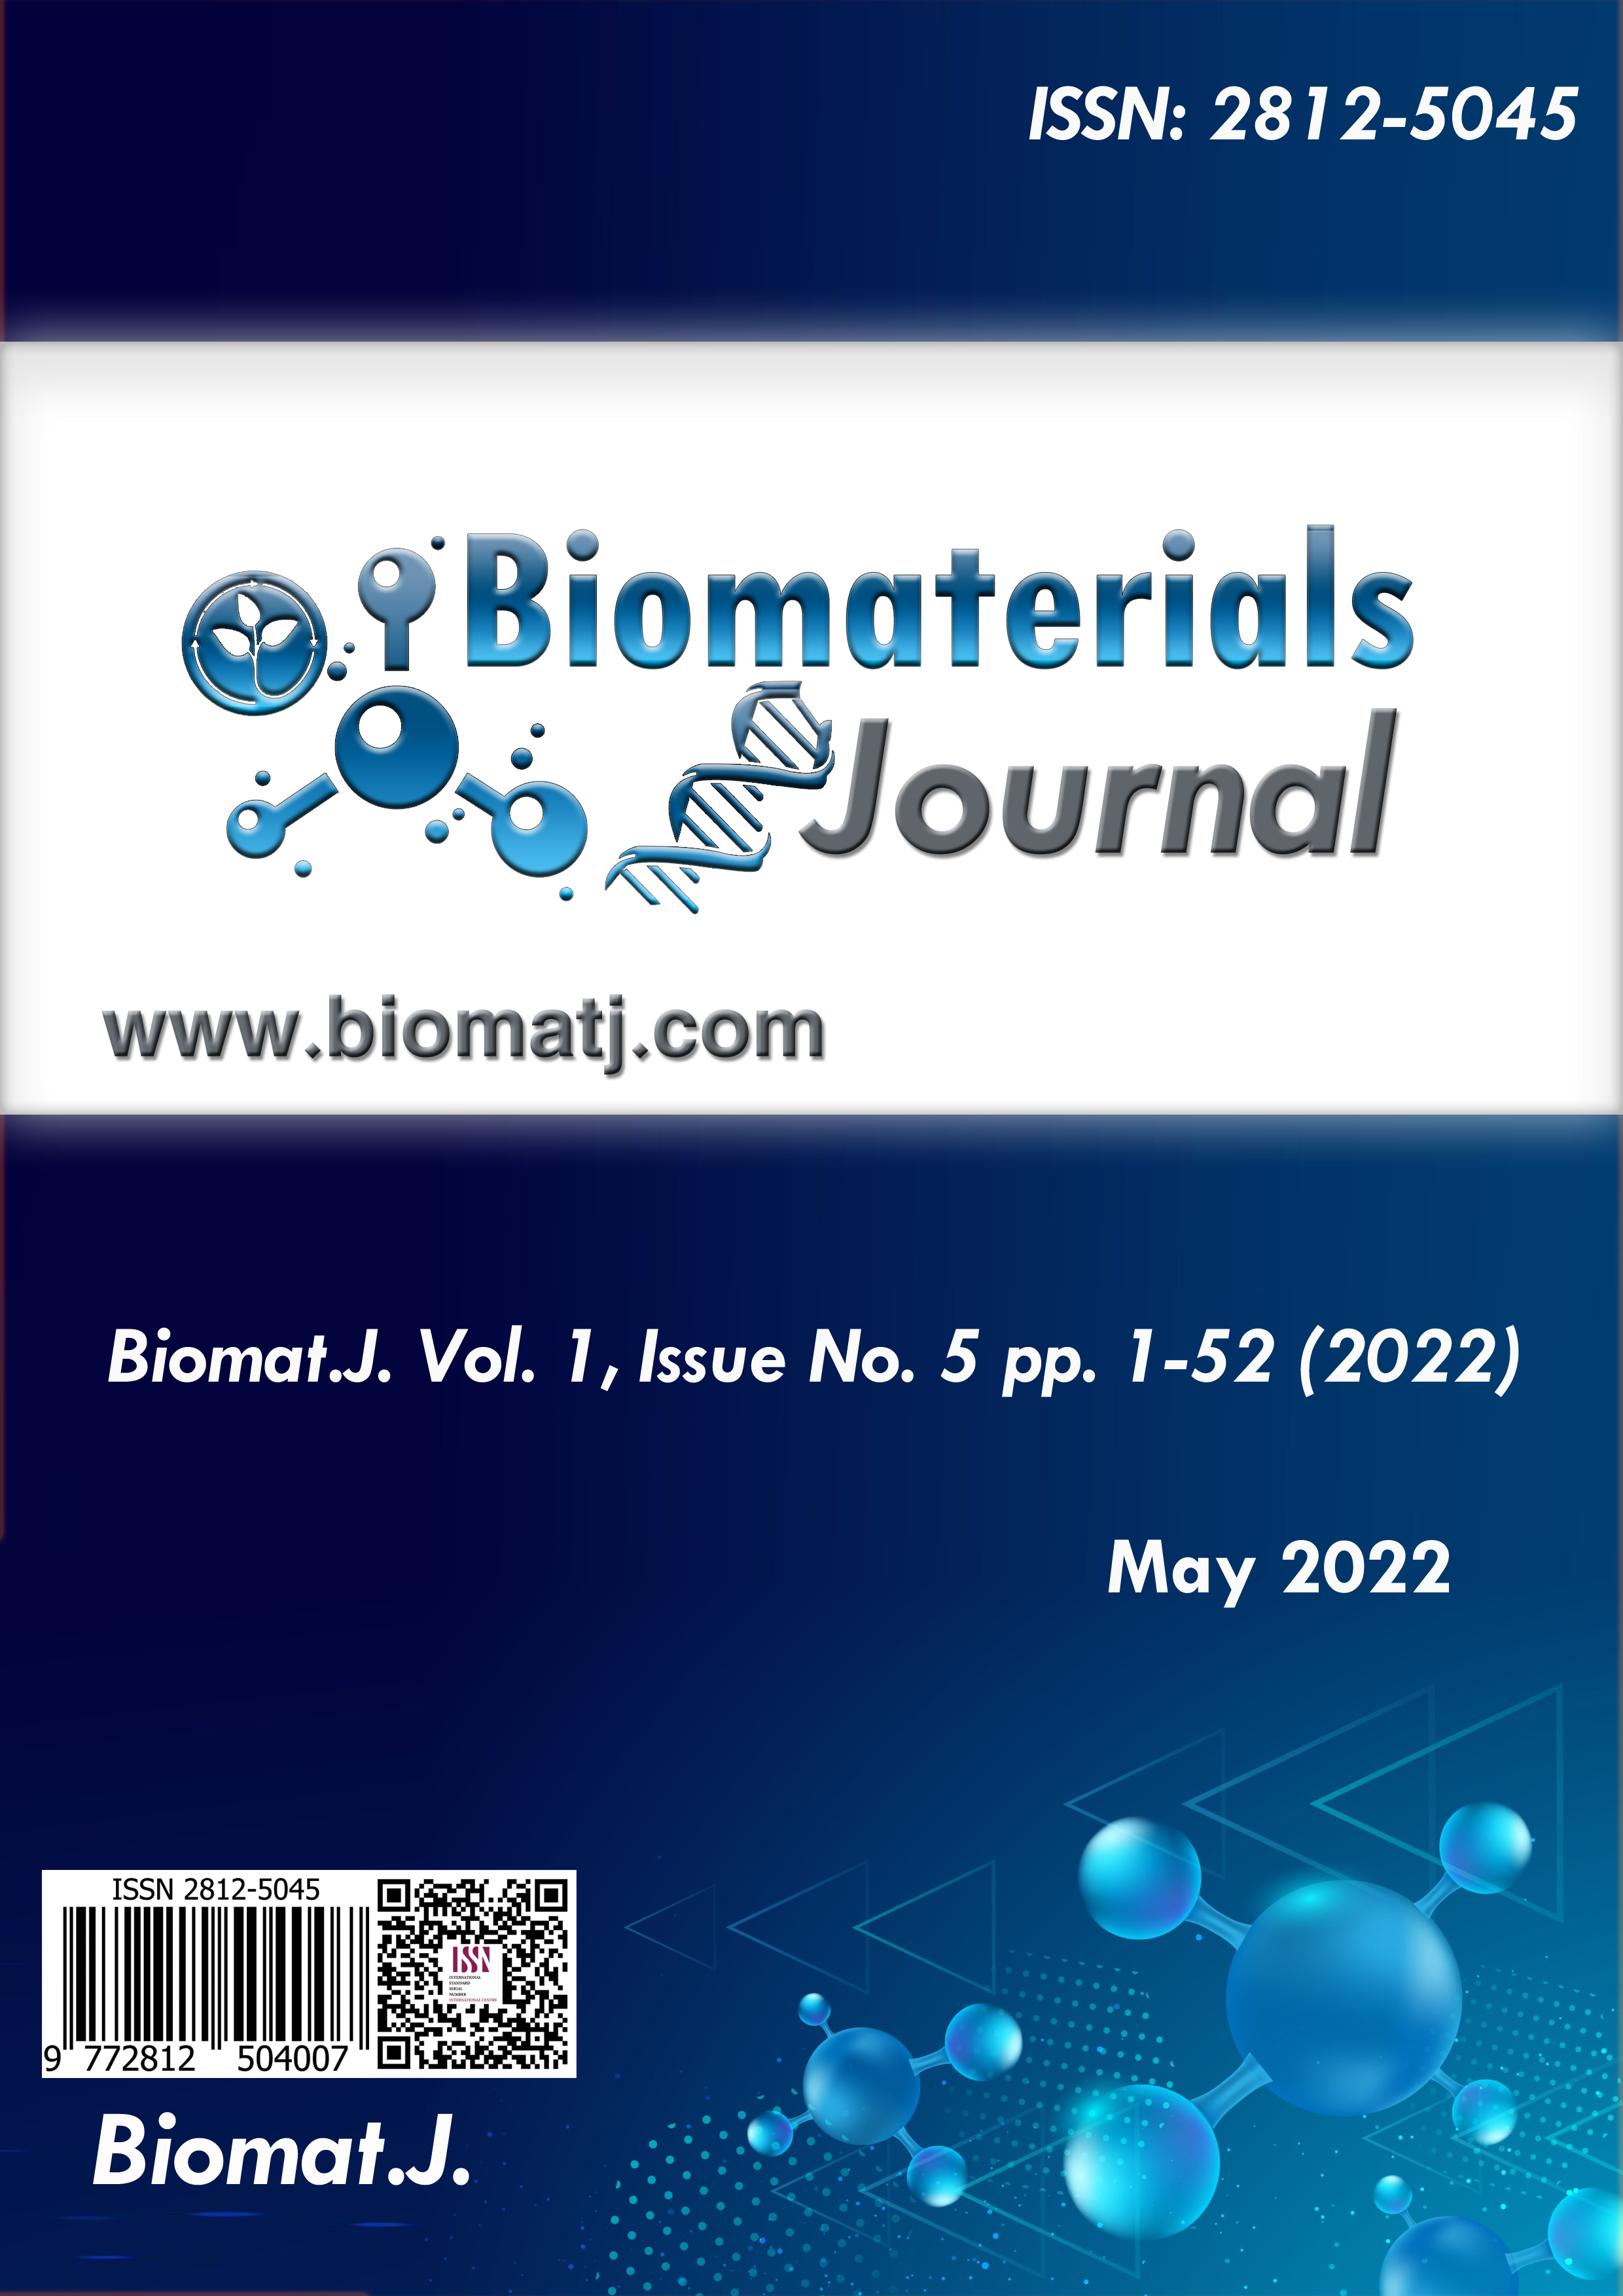 Biomaterials Journal Volume 1, Issue No. 5, March 2022